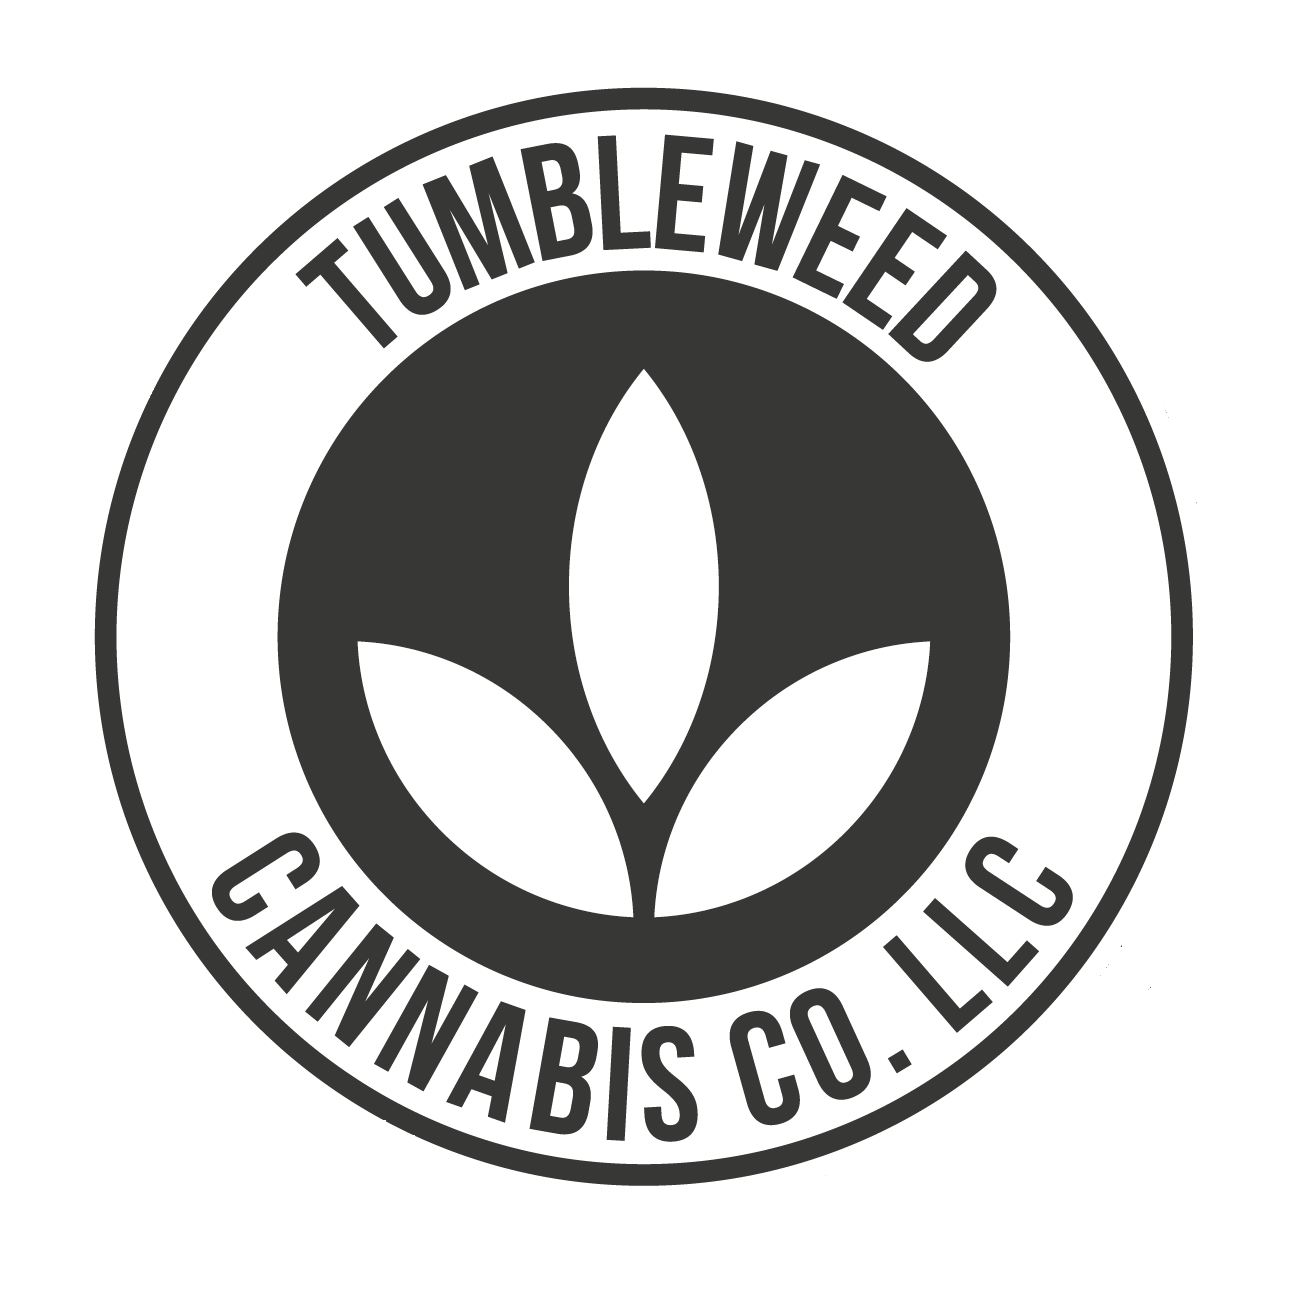 TUMBLEWEED CANNABIS CO. LLC